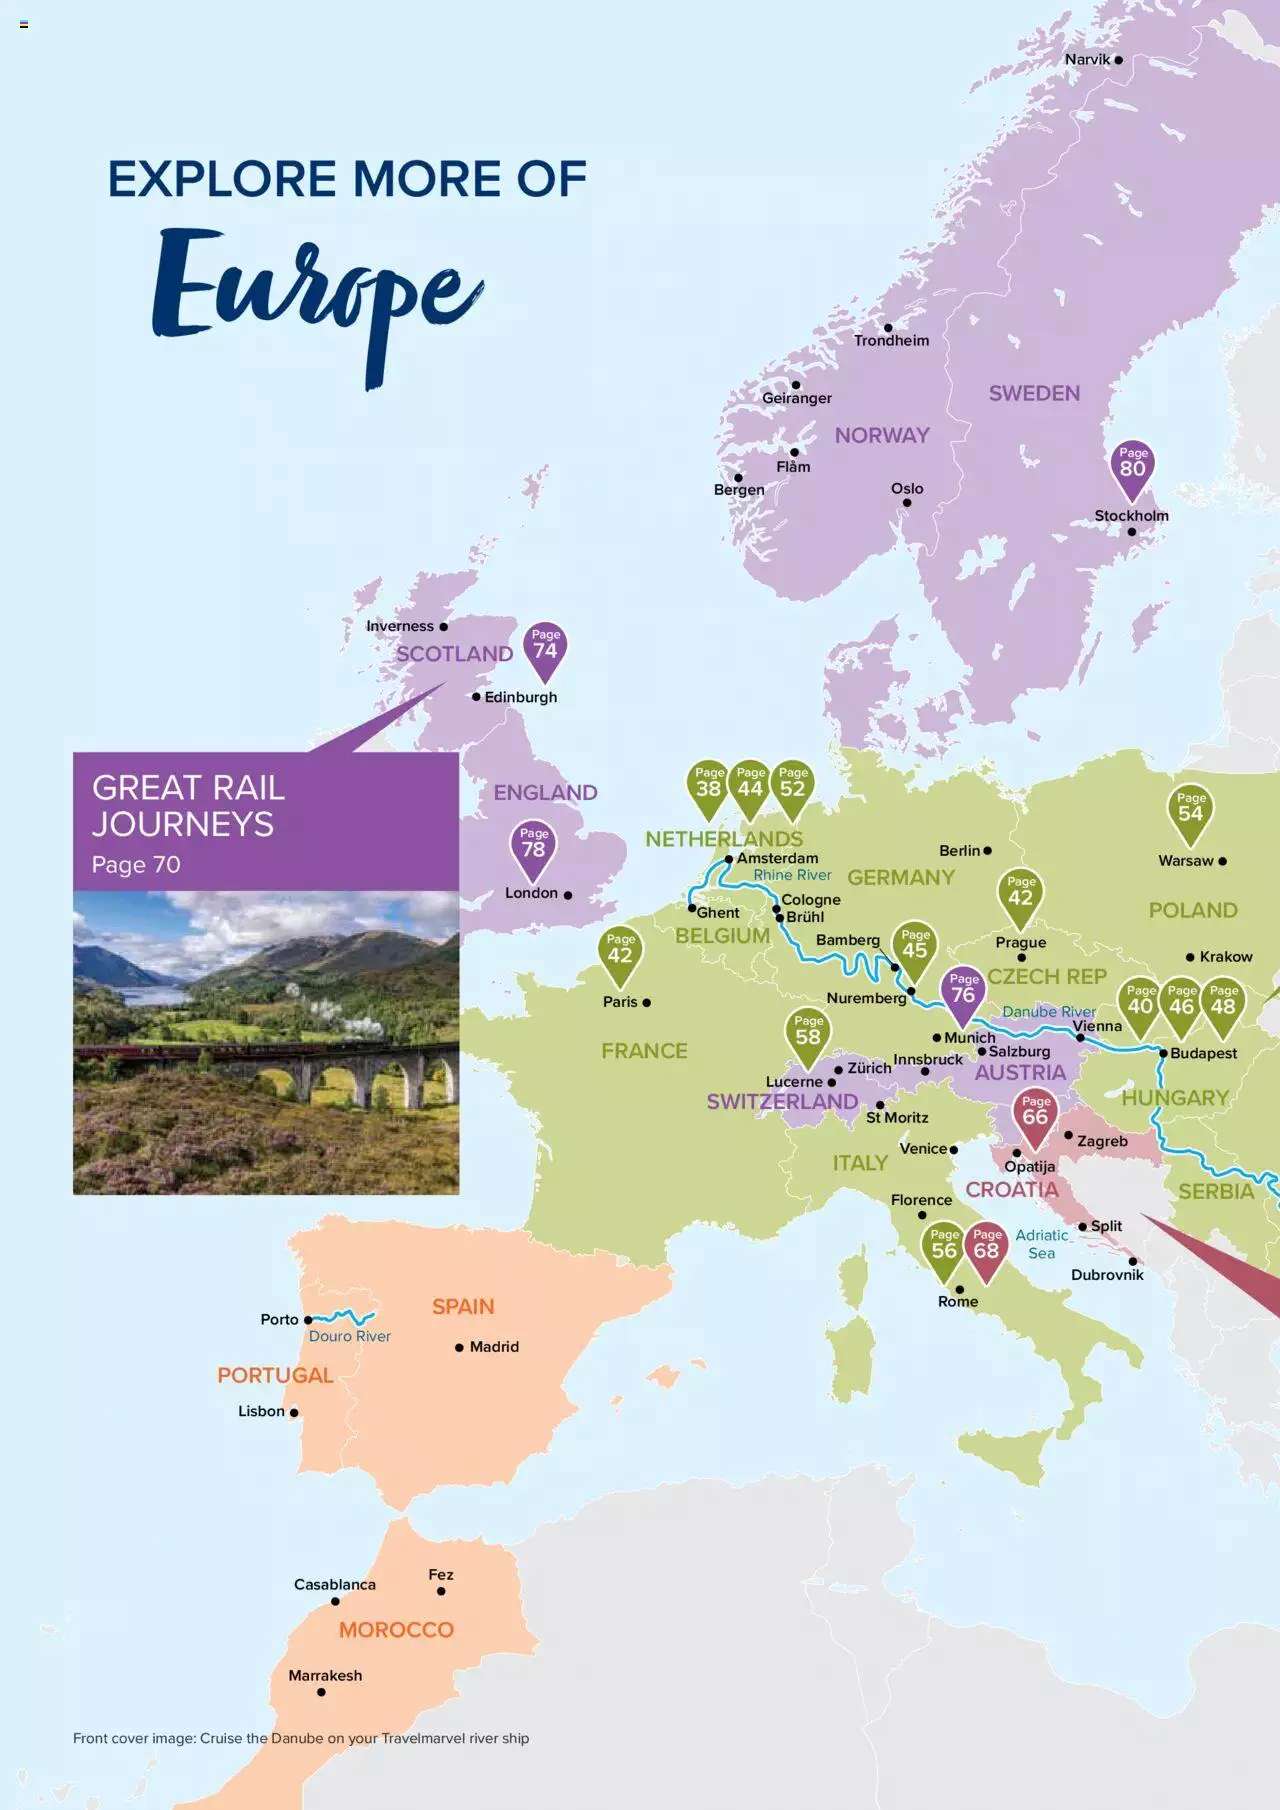 Travelmarvel Europe River Cruising 2024 Preview